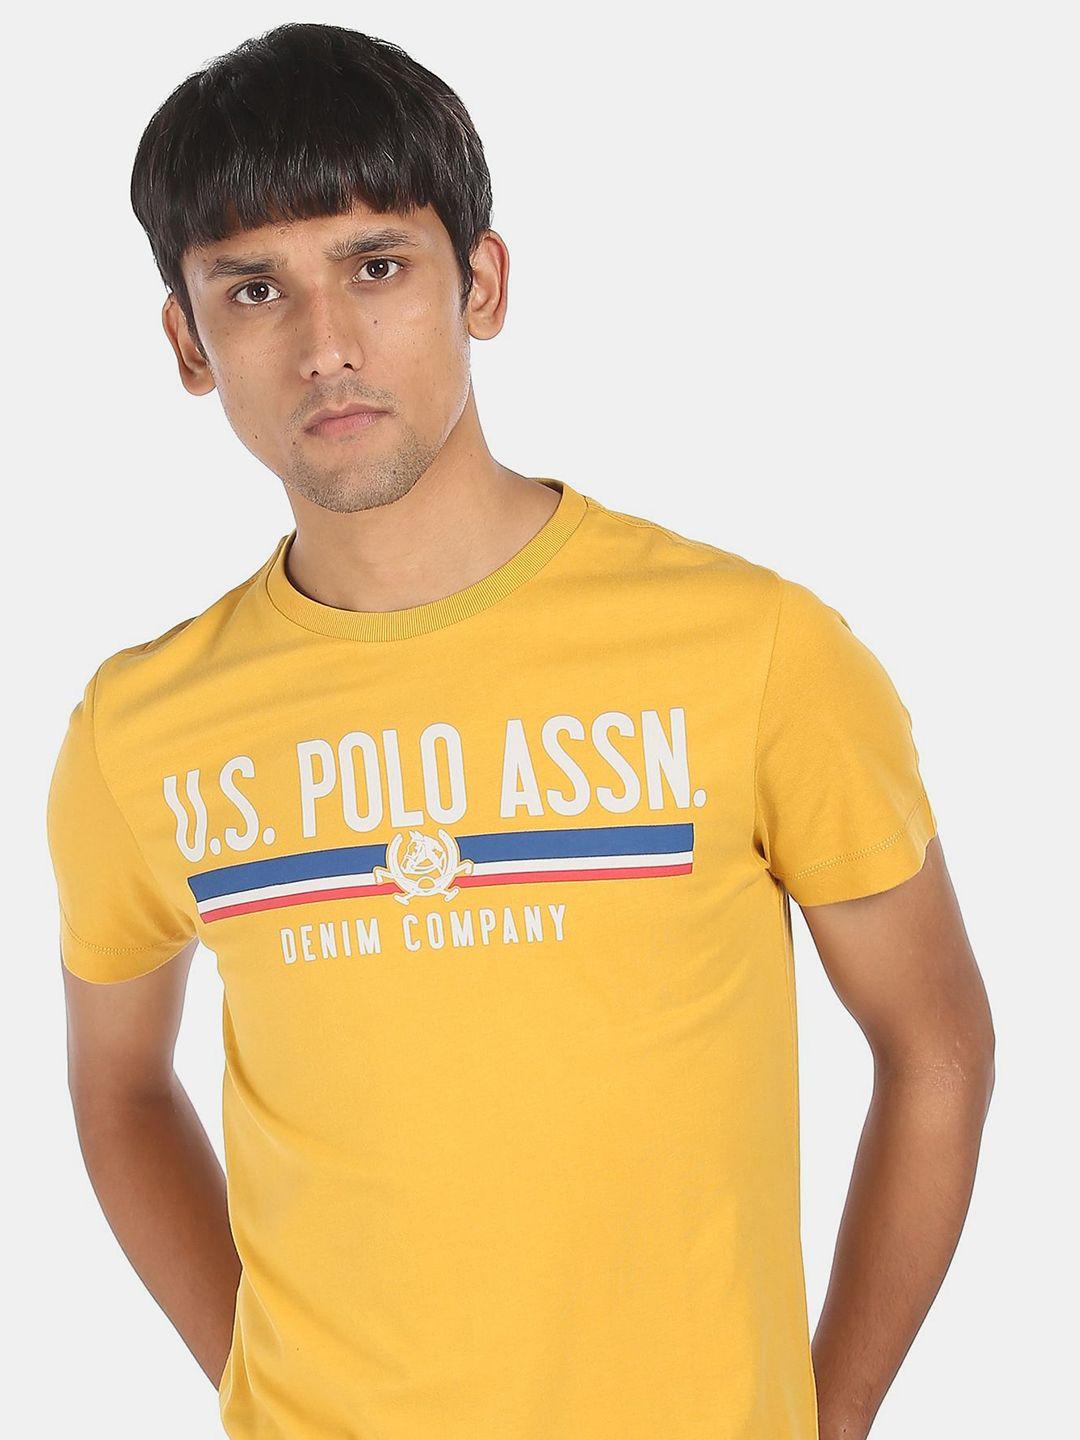 u. s. polo assn. men yellow  white brand logo printed pure cotton t-shirt